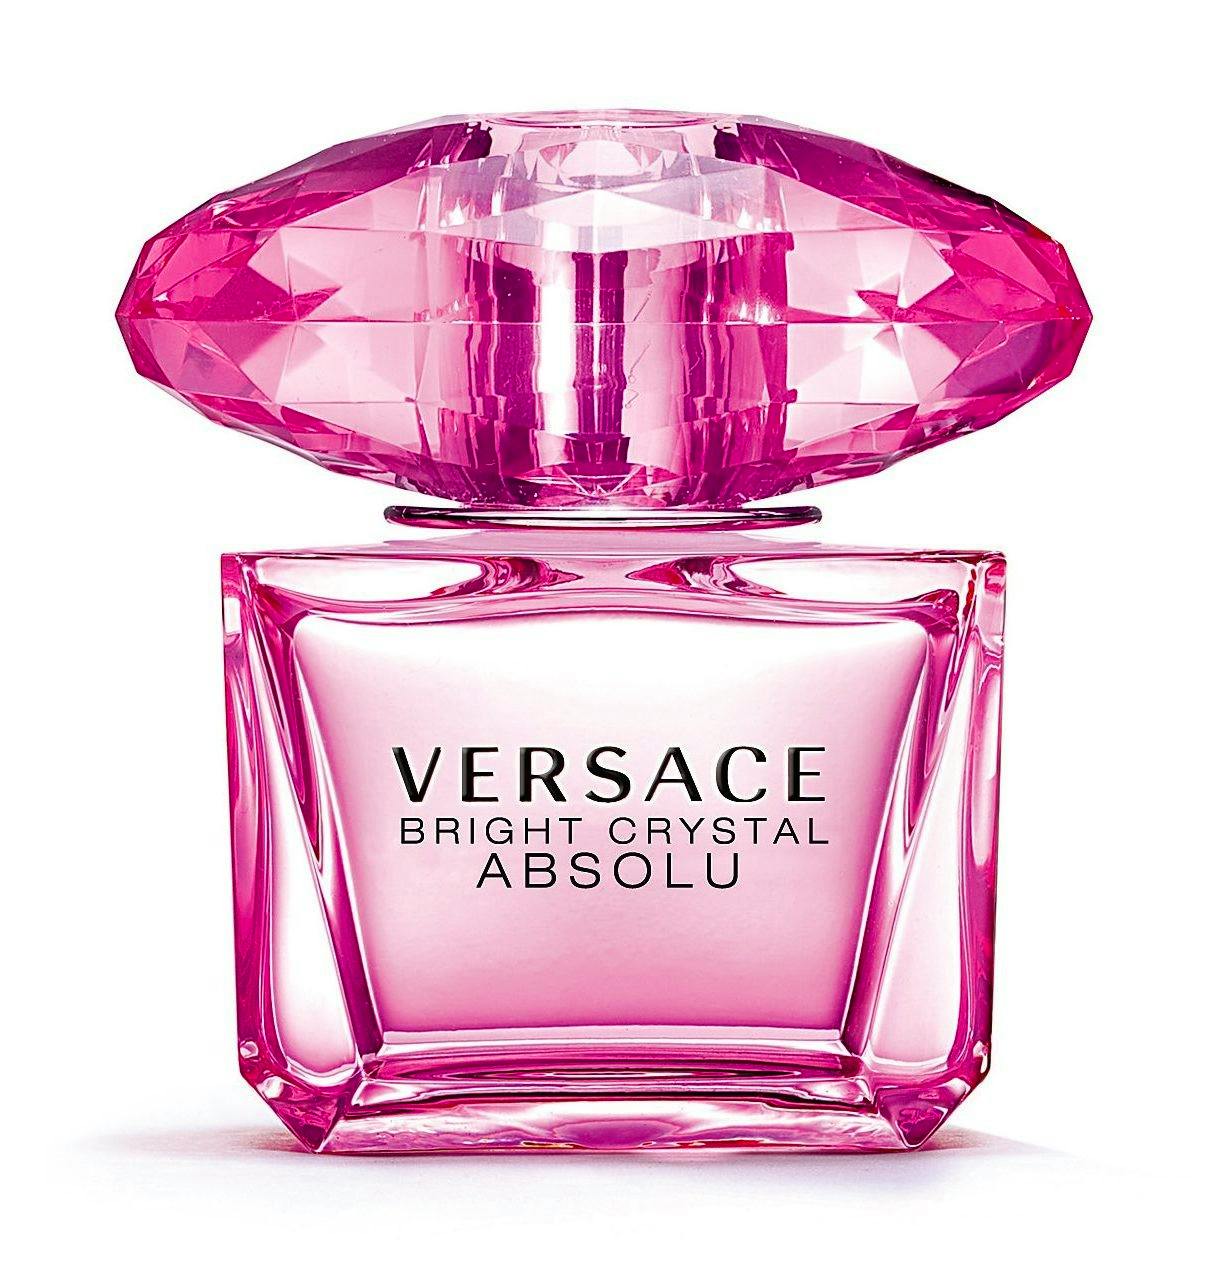 Versace Bright Crystal Women's Perfume 30ml, 50ml, 90ml